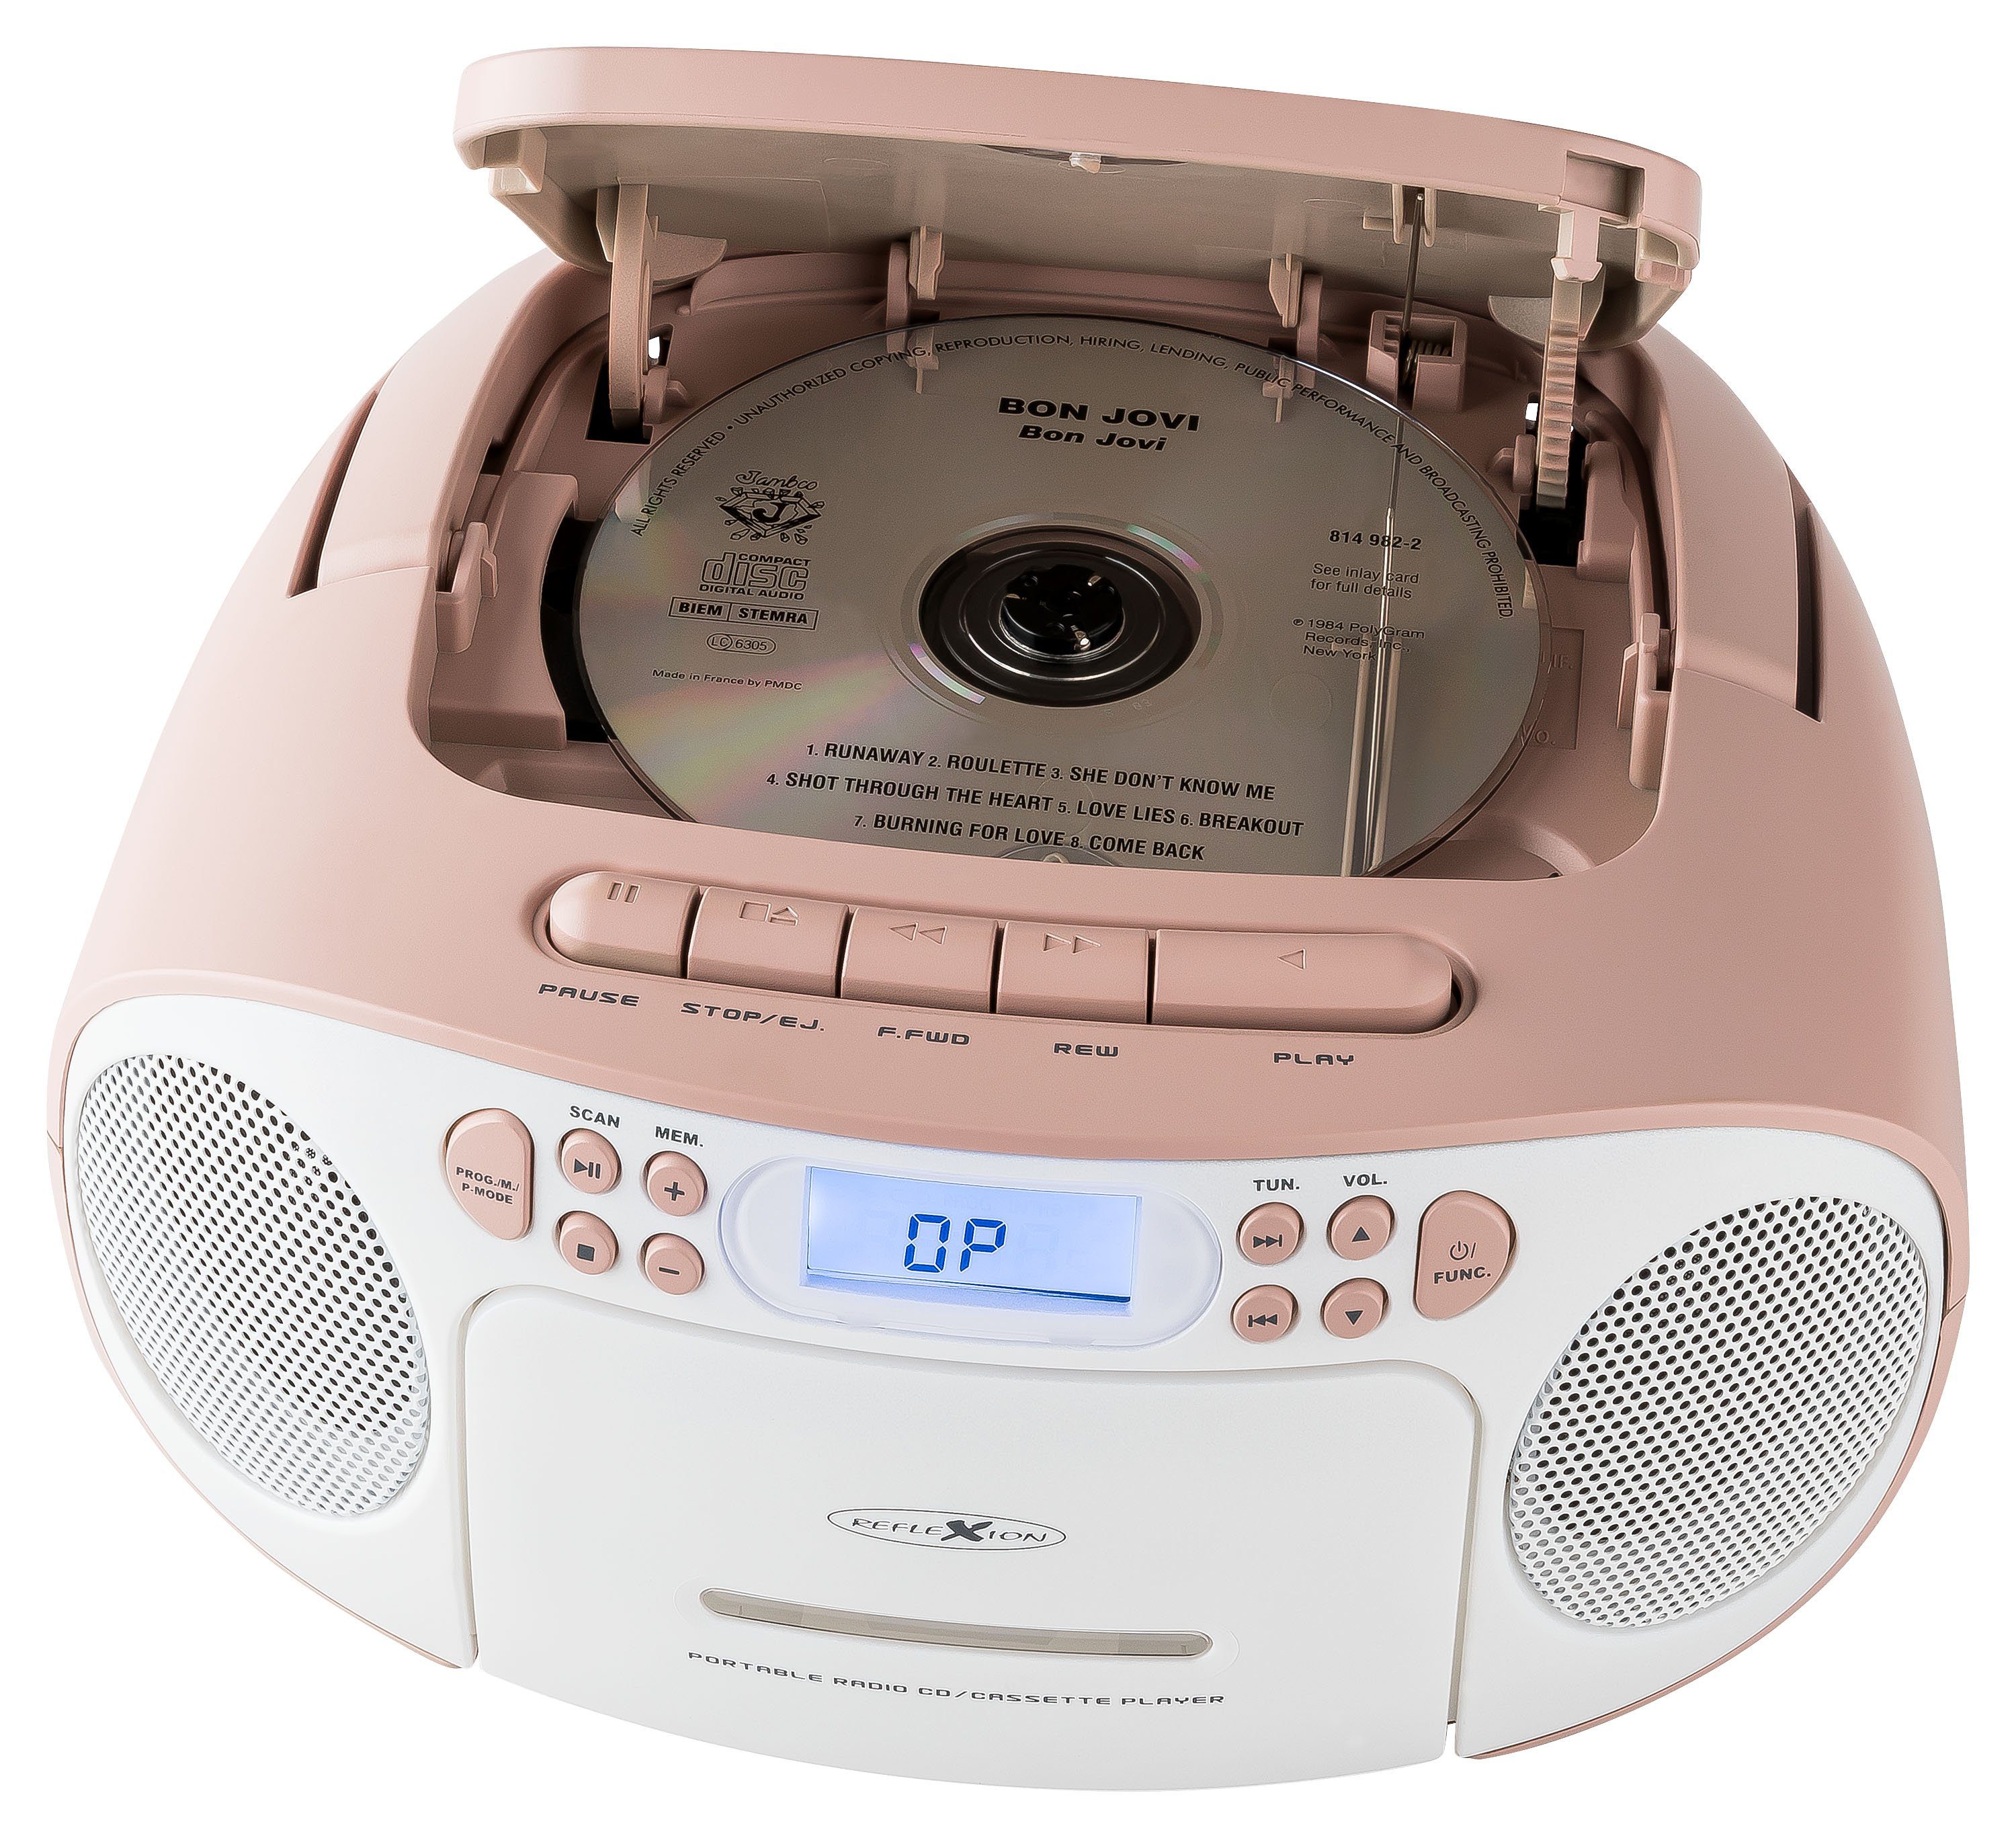 Reflexion LCD-Display, 20 Boombox Radio, Kopfhörer-Anschluss) W, weiß/pink Stereo PLL (UKW Boombox AUX-Eingang, Tragbare CD/Radio/Kassette, RCR2260